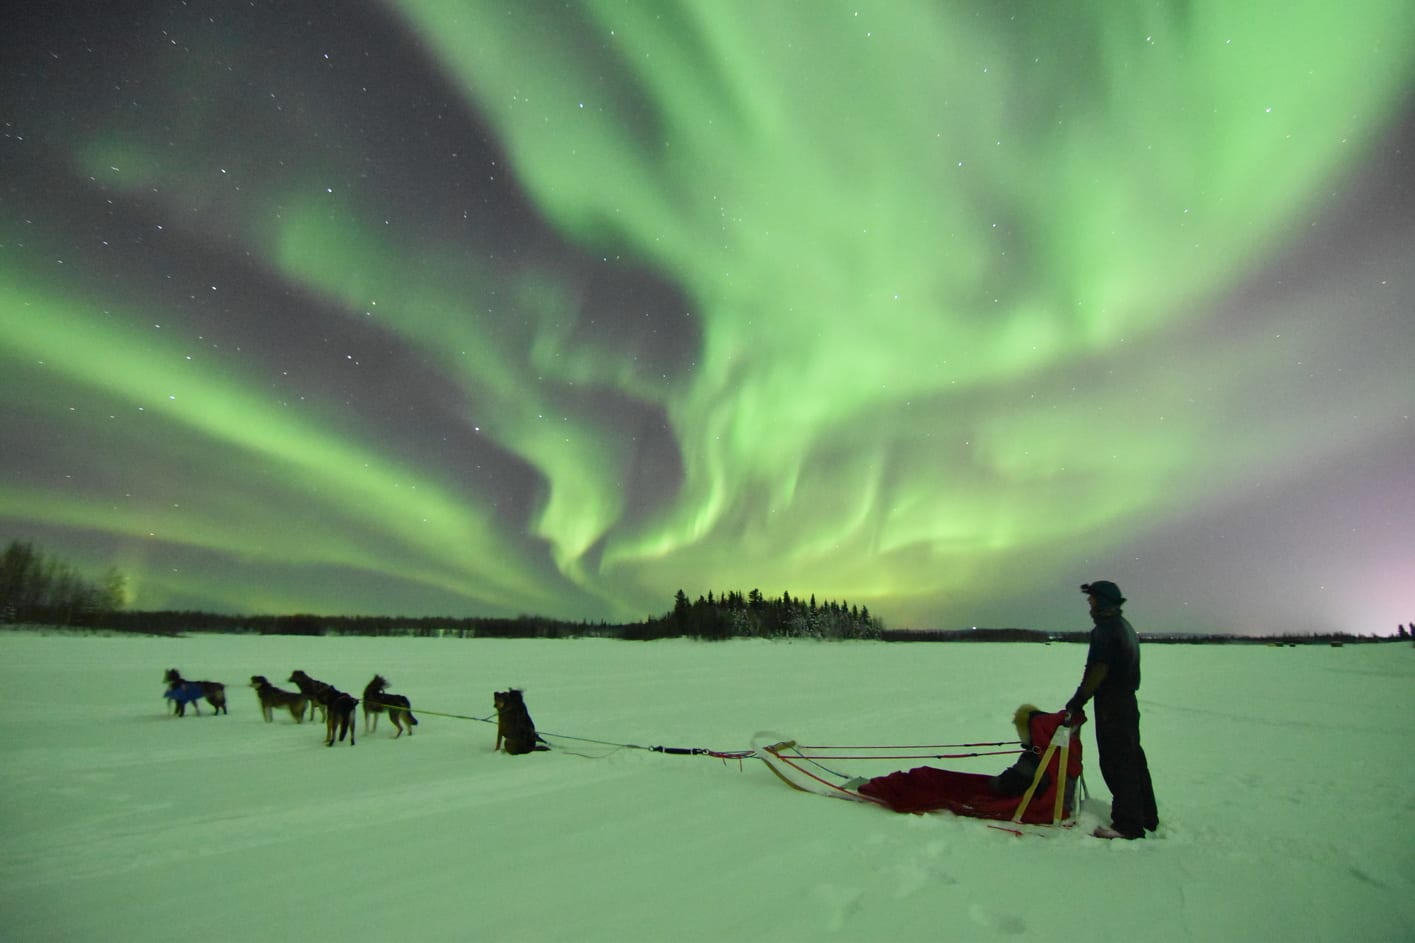 Tour de auroras boreales en Fairbanks con paseo en trineo tirado por perros